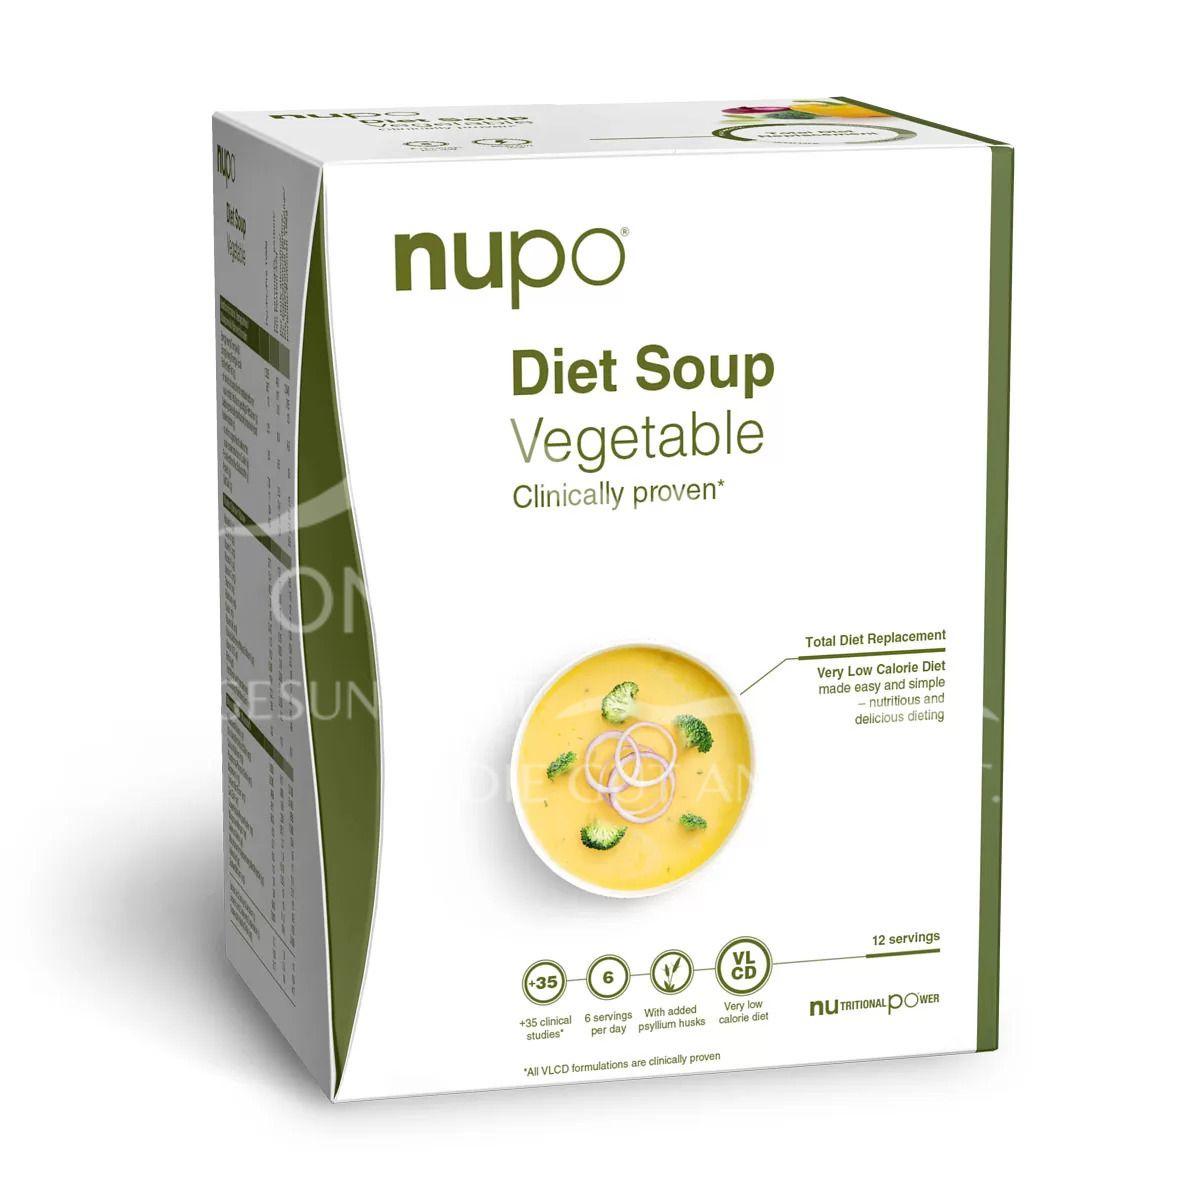 Nupo Diet Soup Vegetable